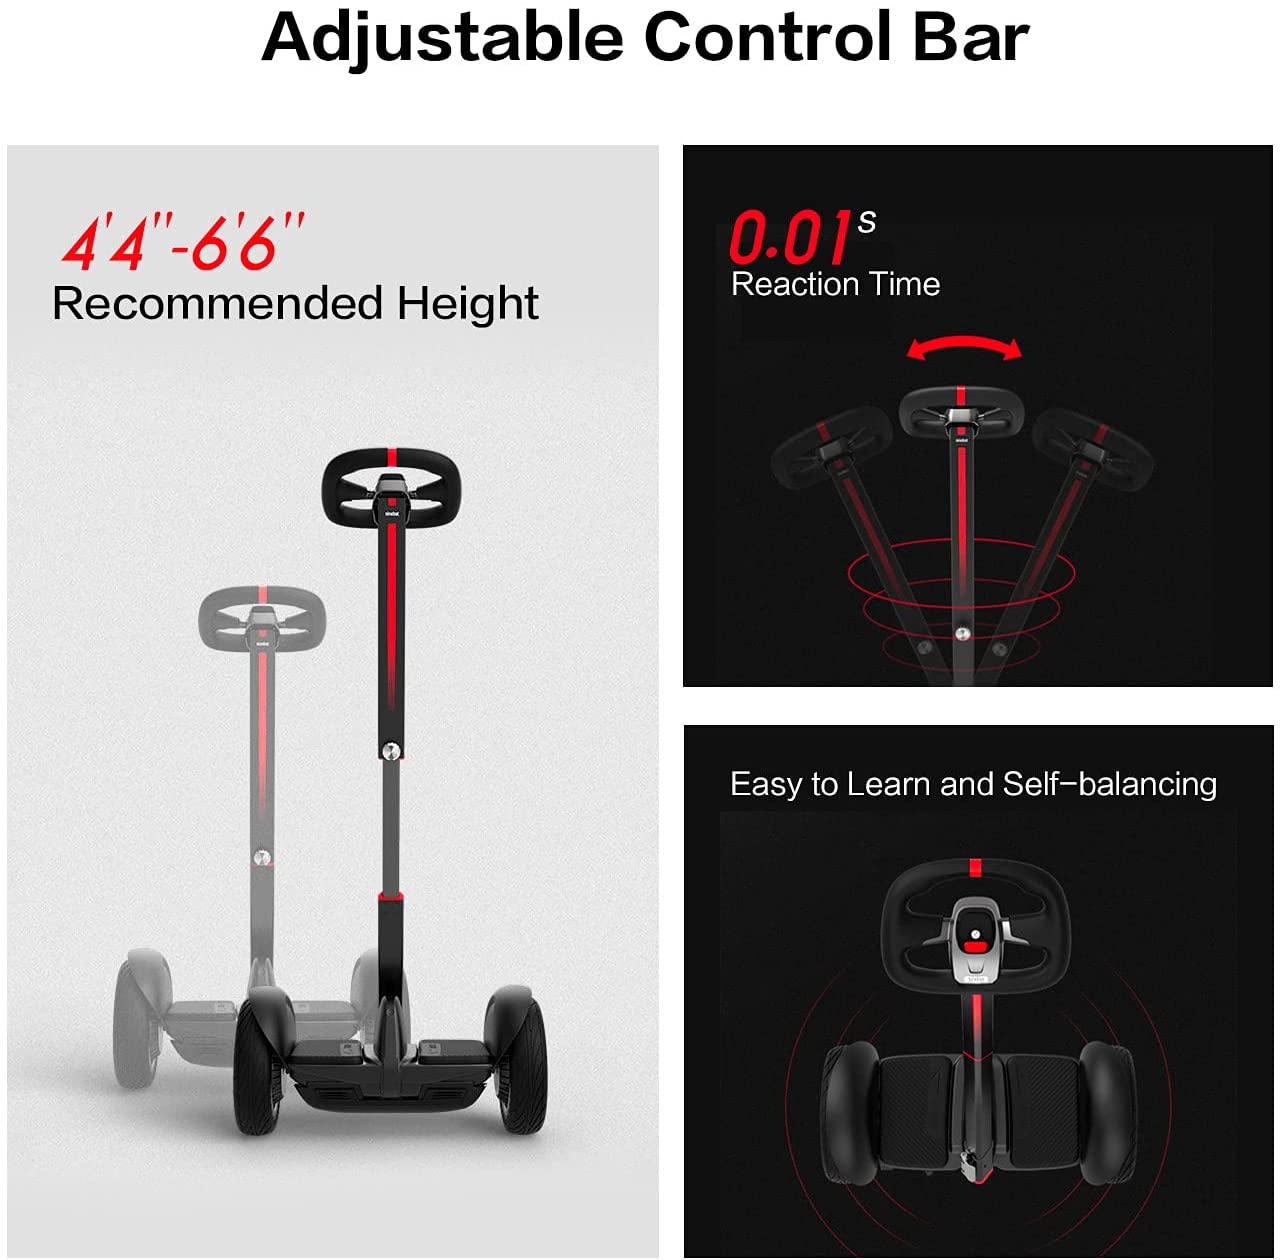 Segway Ninebot S Max Smart Self-Balancing Electric Scooter – E